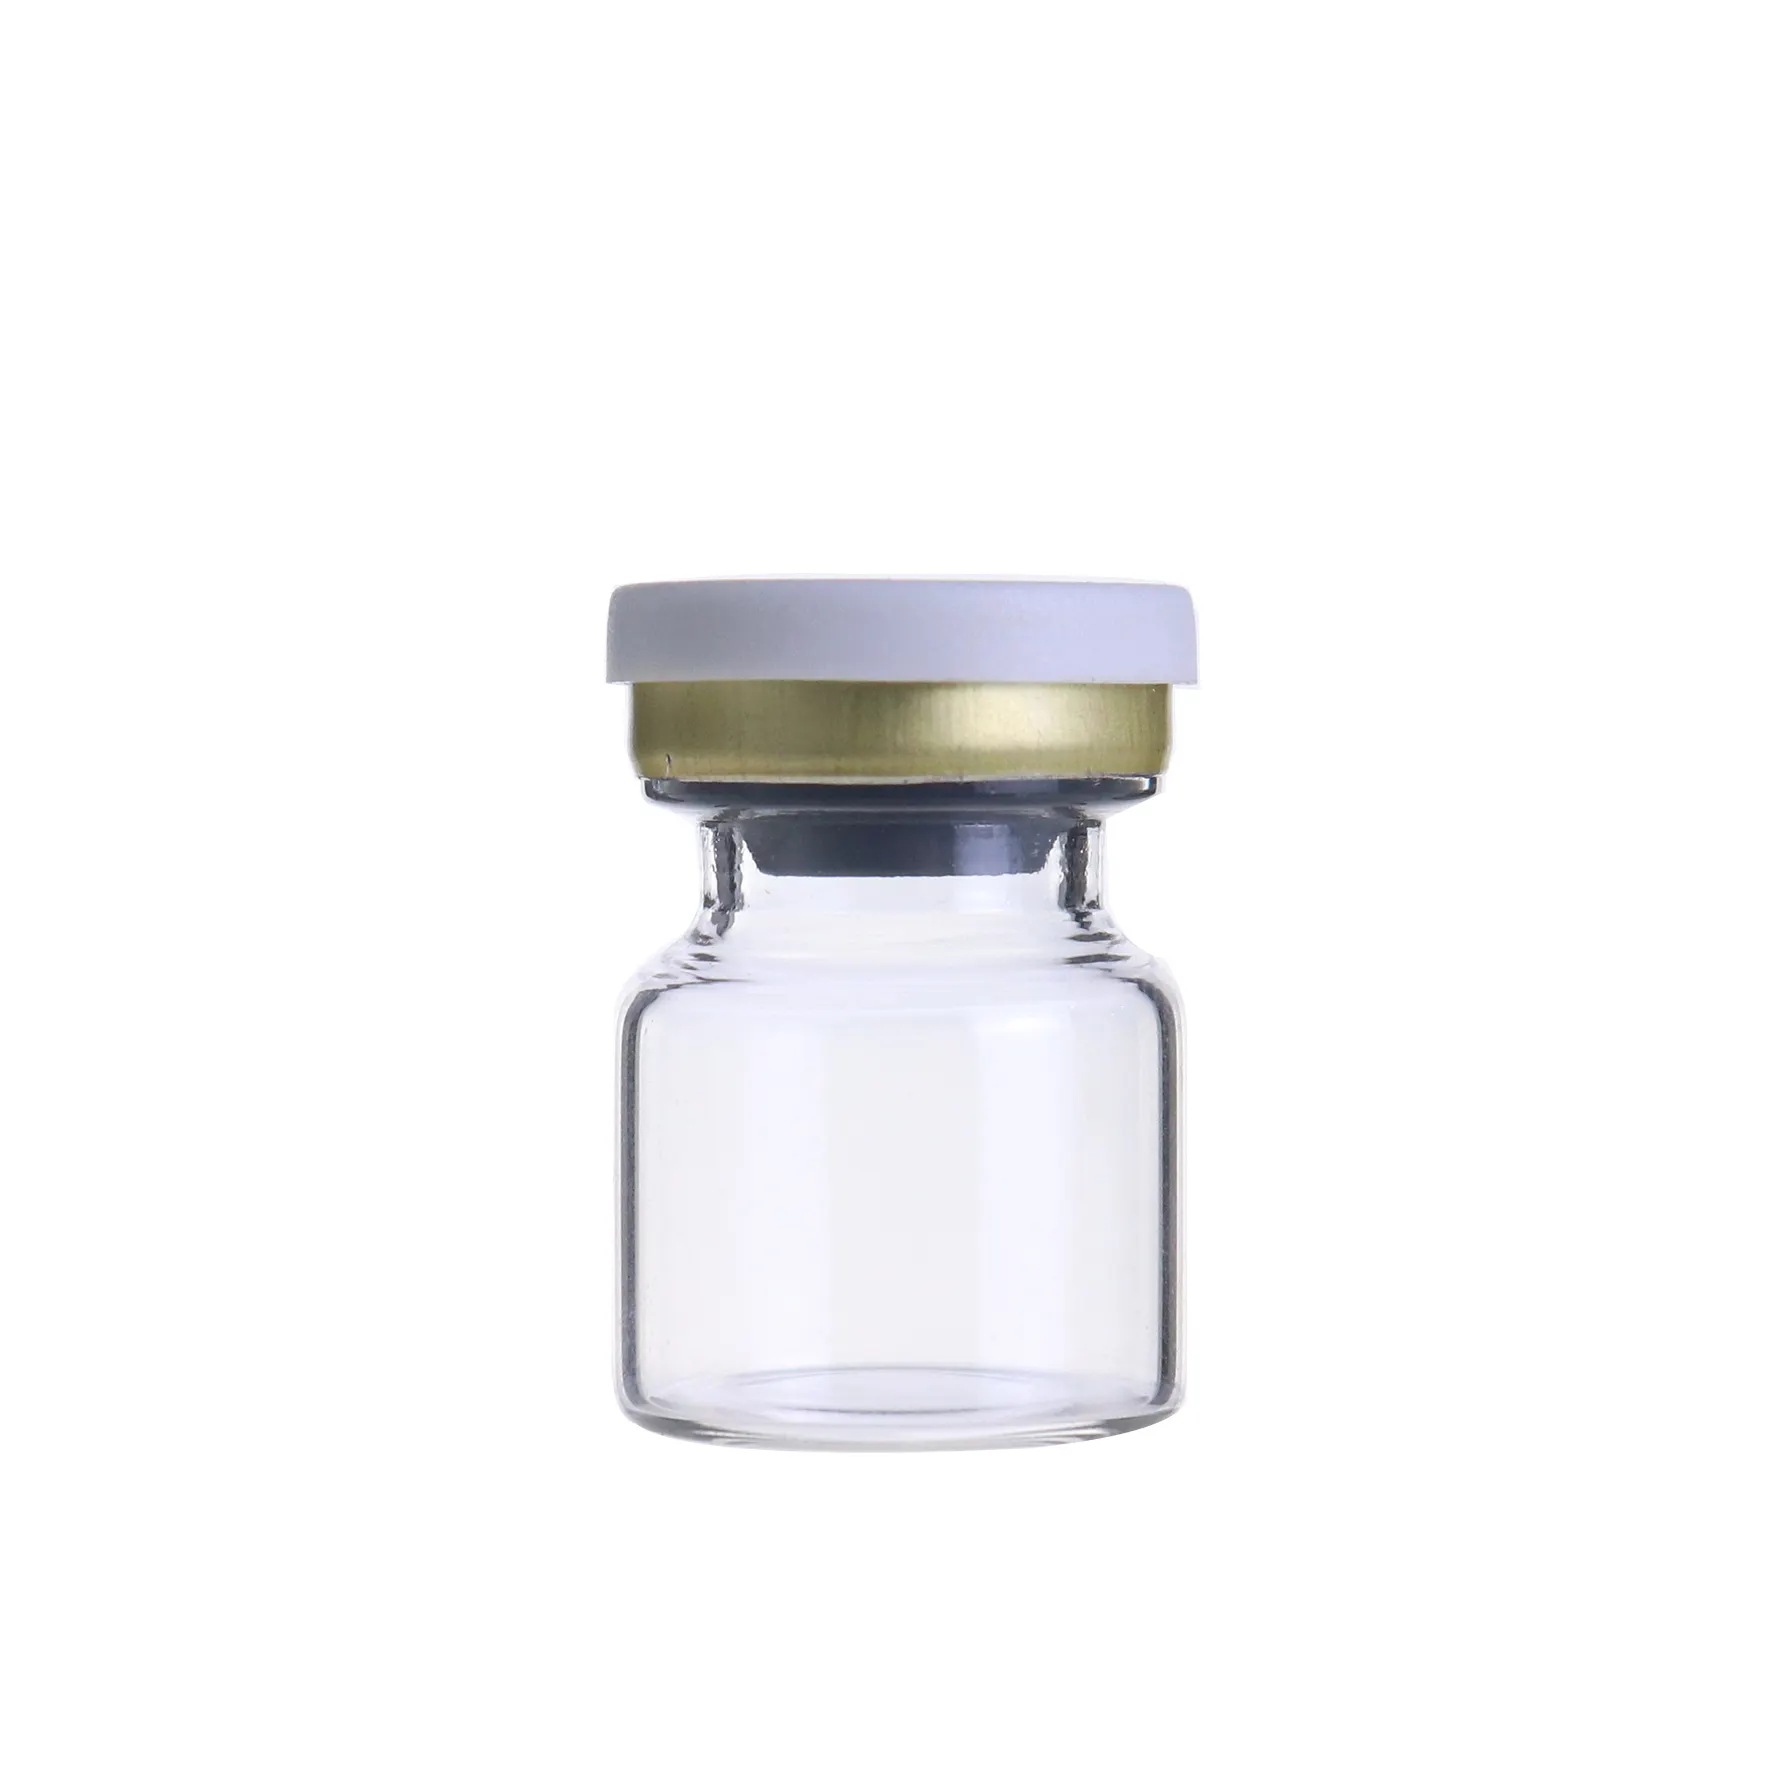 कम MOQ एम्बर स्पष्ट दवा अत्तार कांच की शीशी इंजेक्शन 2ml 3 ml होम्योपैथिक बोतल के साथ बोतल कैप